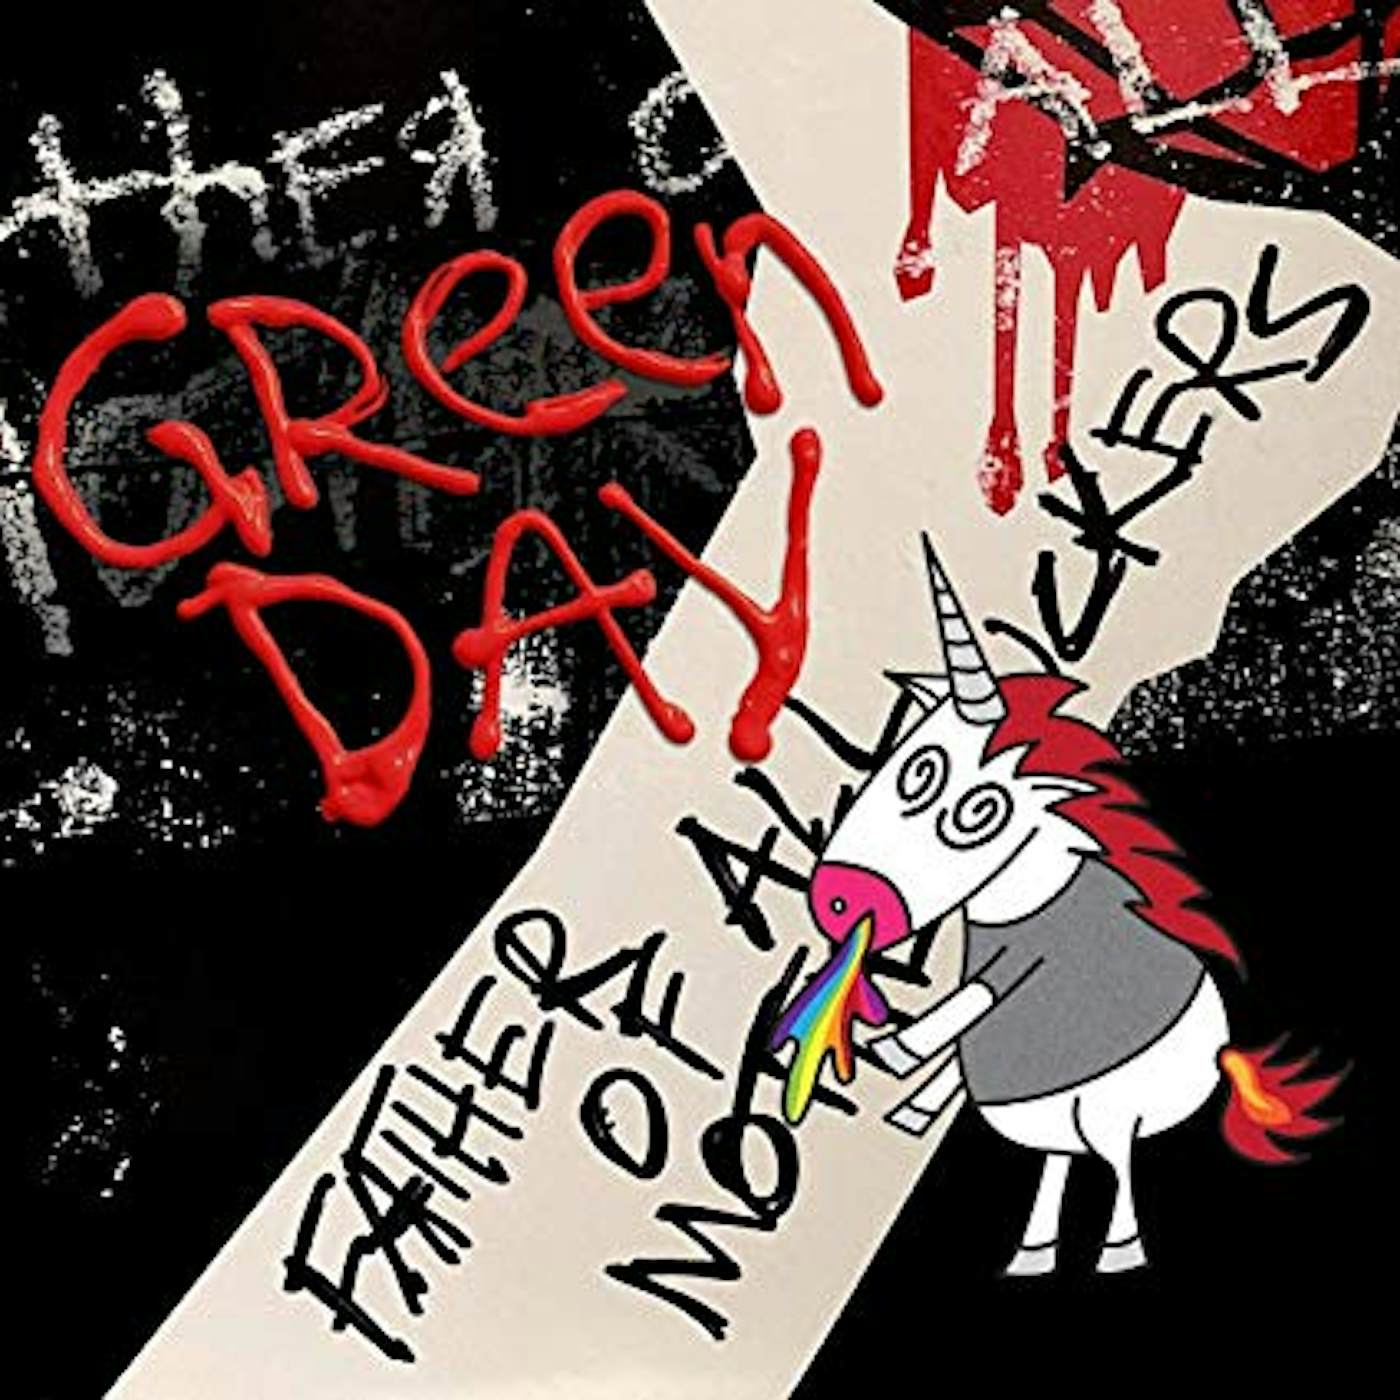 Green Day Vinyl Record Art